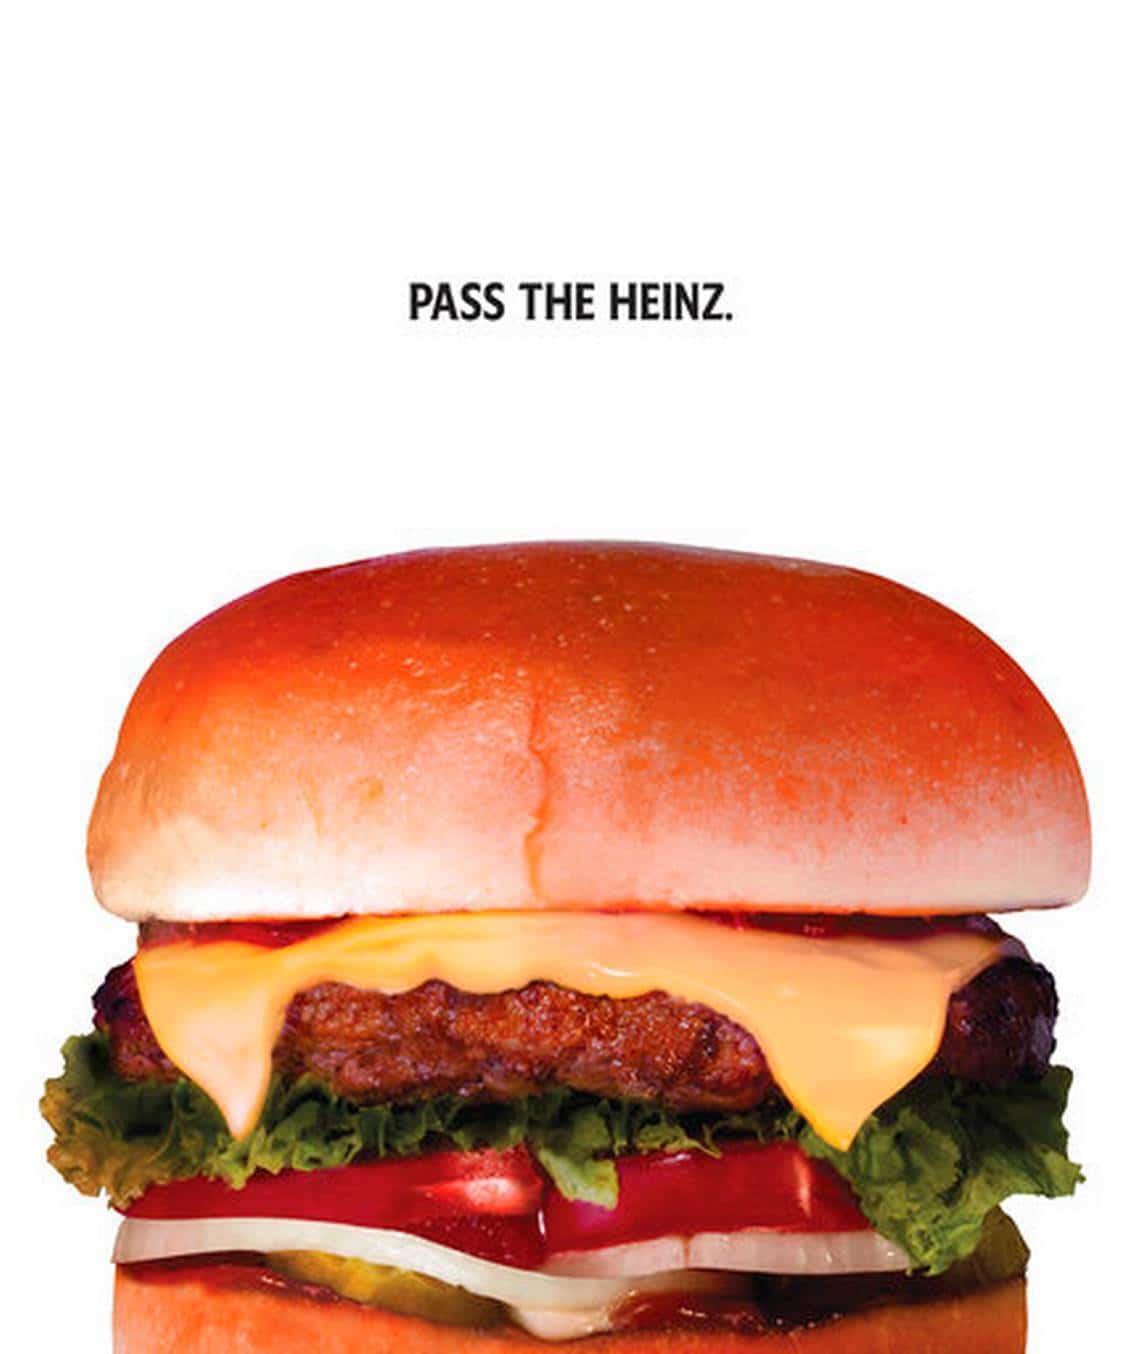 Pass-the-heinz